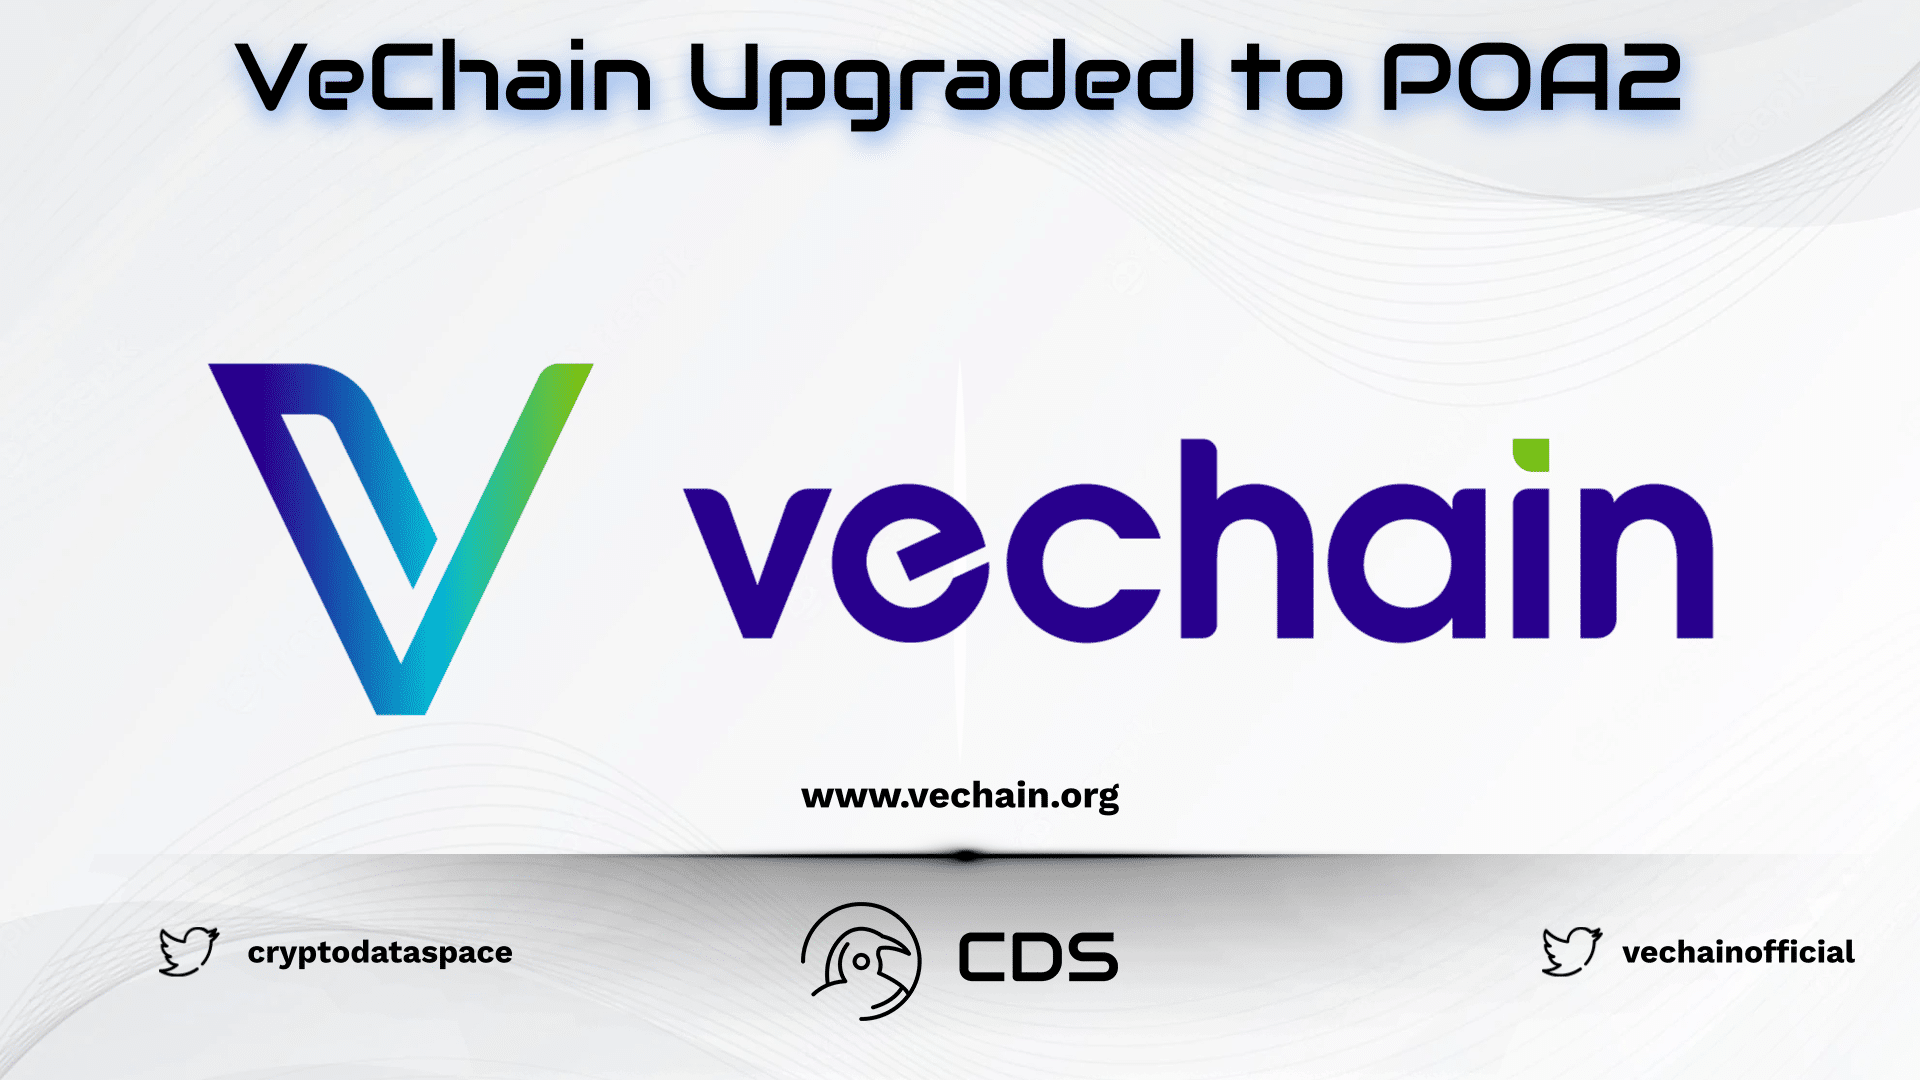 VeChain Upgraded to POA2